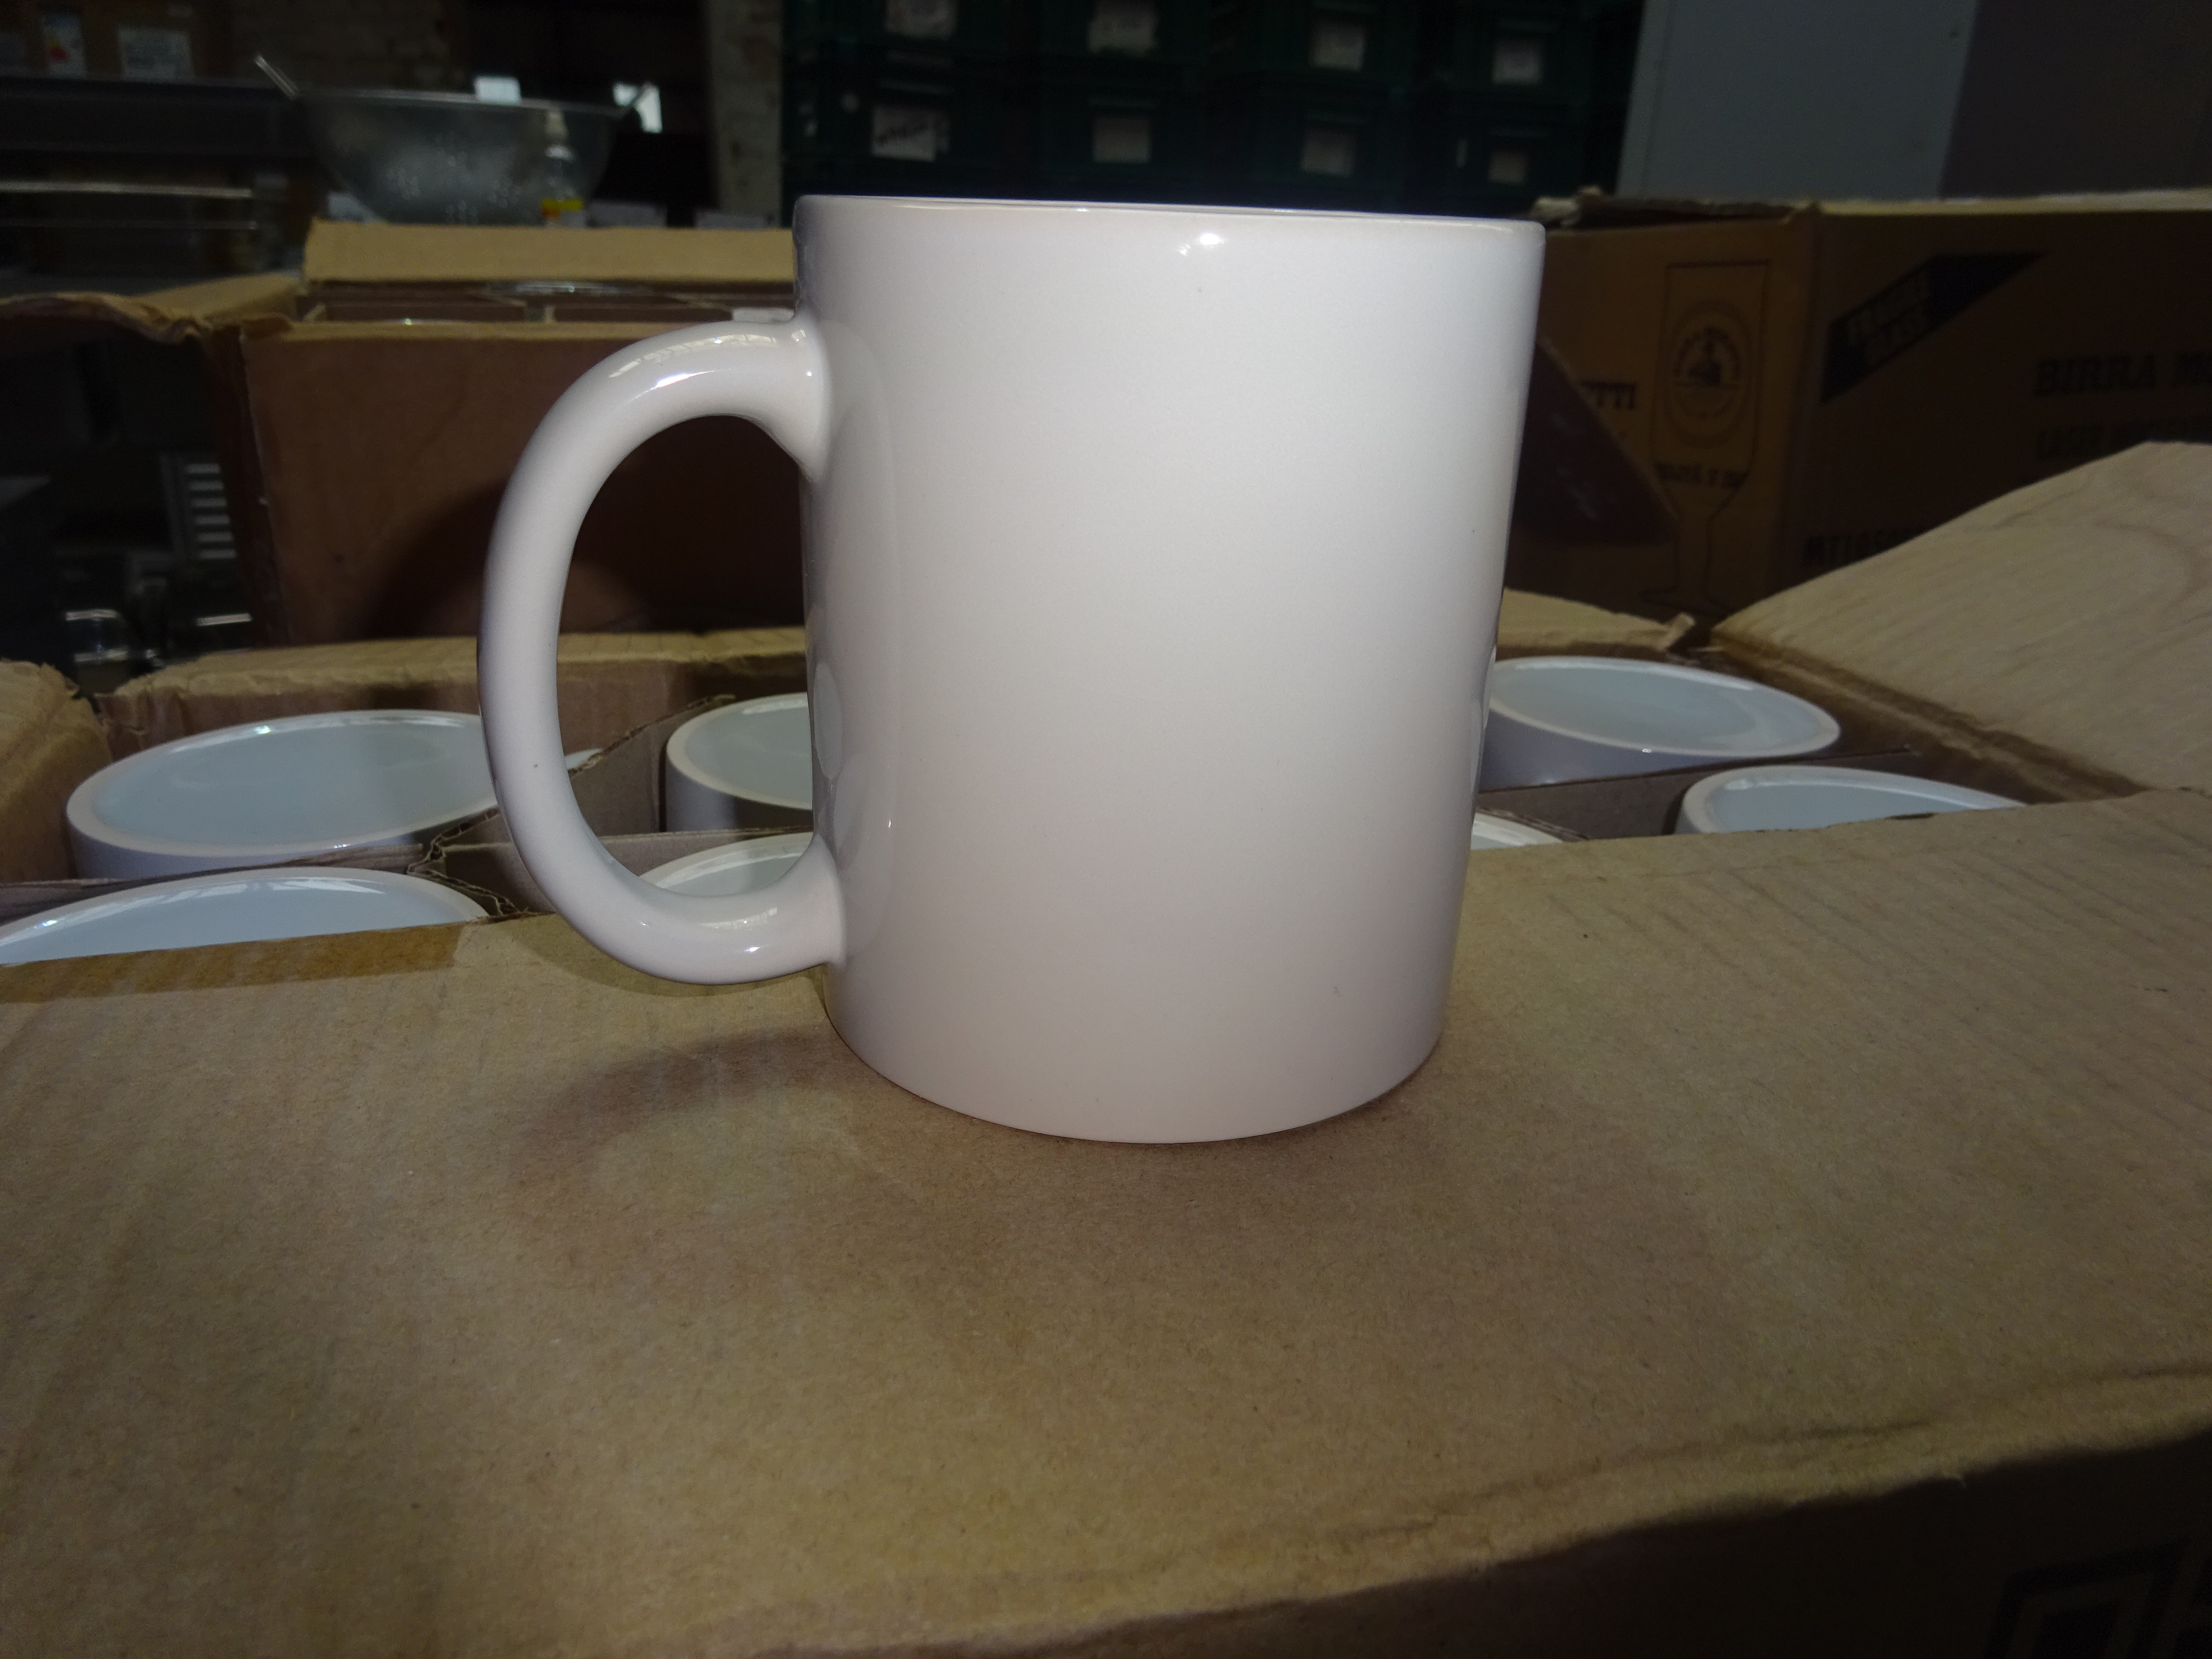 Straight sided mugs x 12